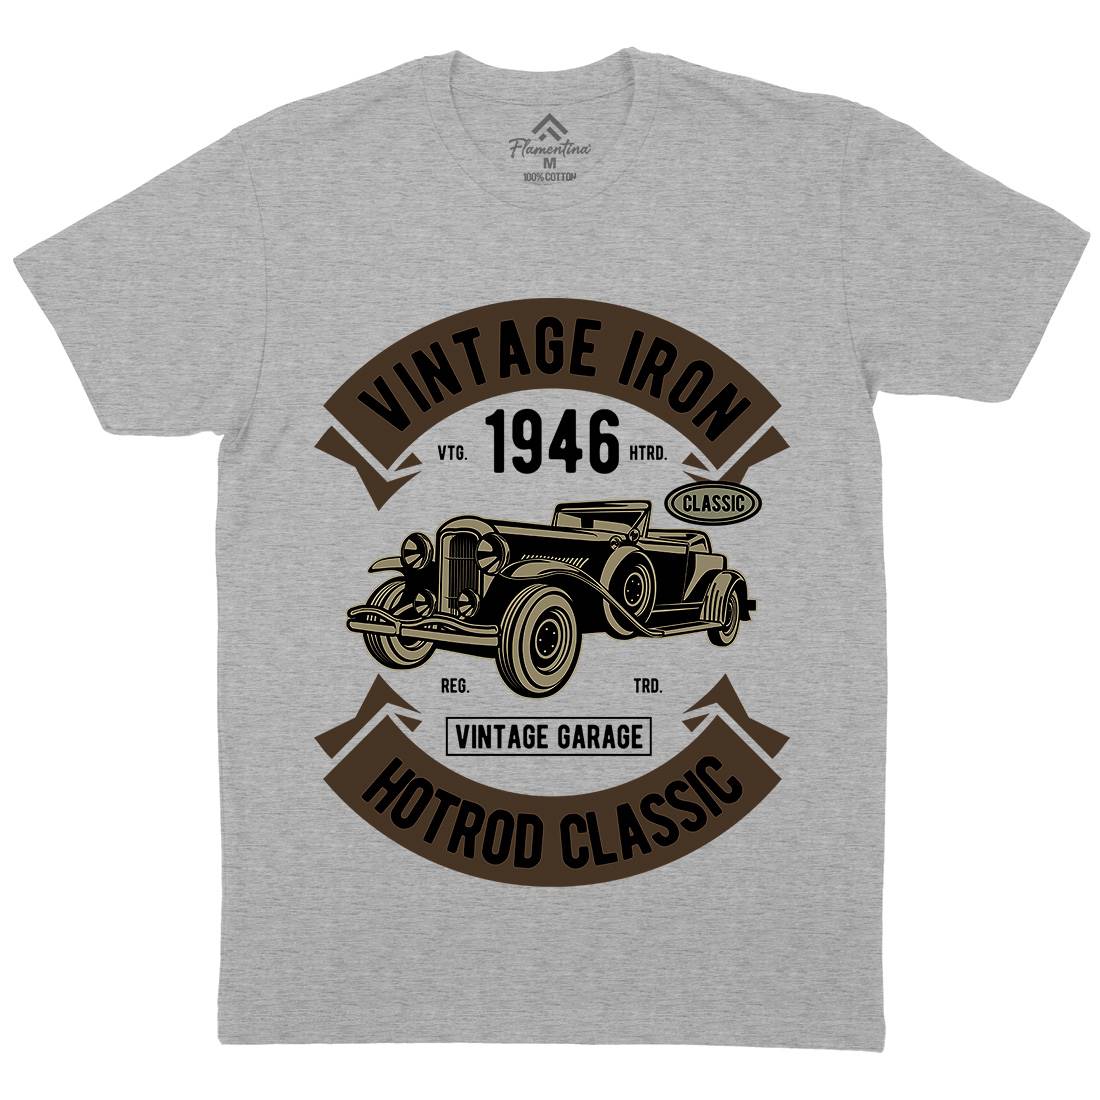 Vintage Iron Classic Mens Organic Crew Neck T-Shirt Cars D595